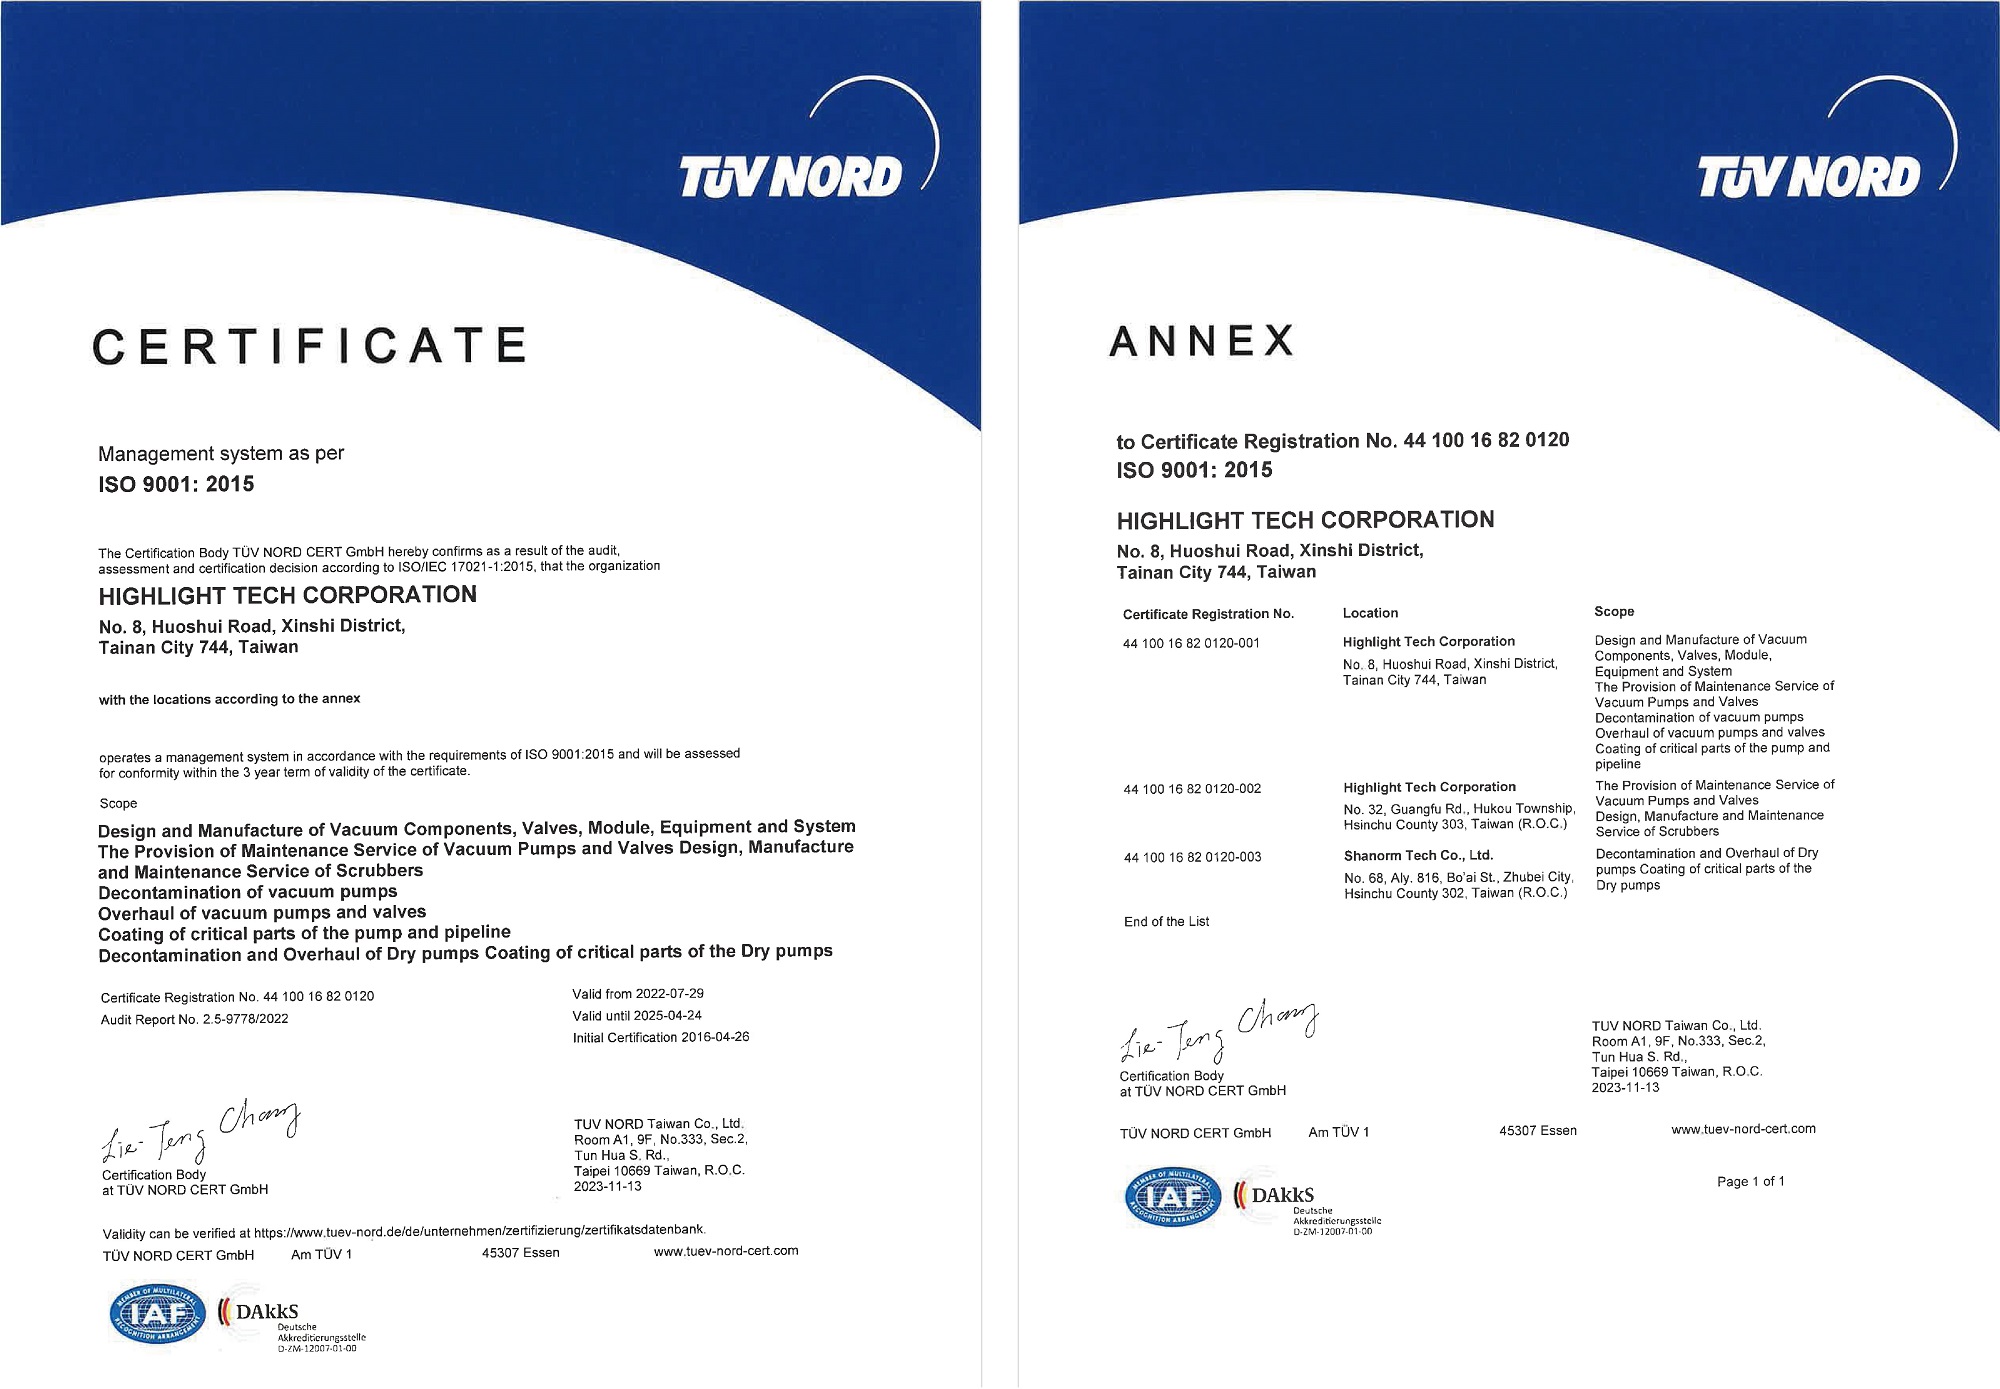 ISO 9001 international quality standard certification